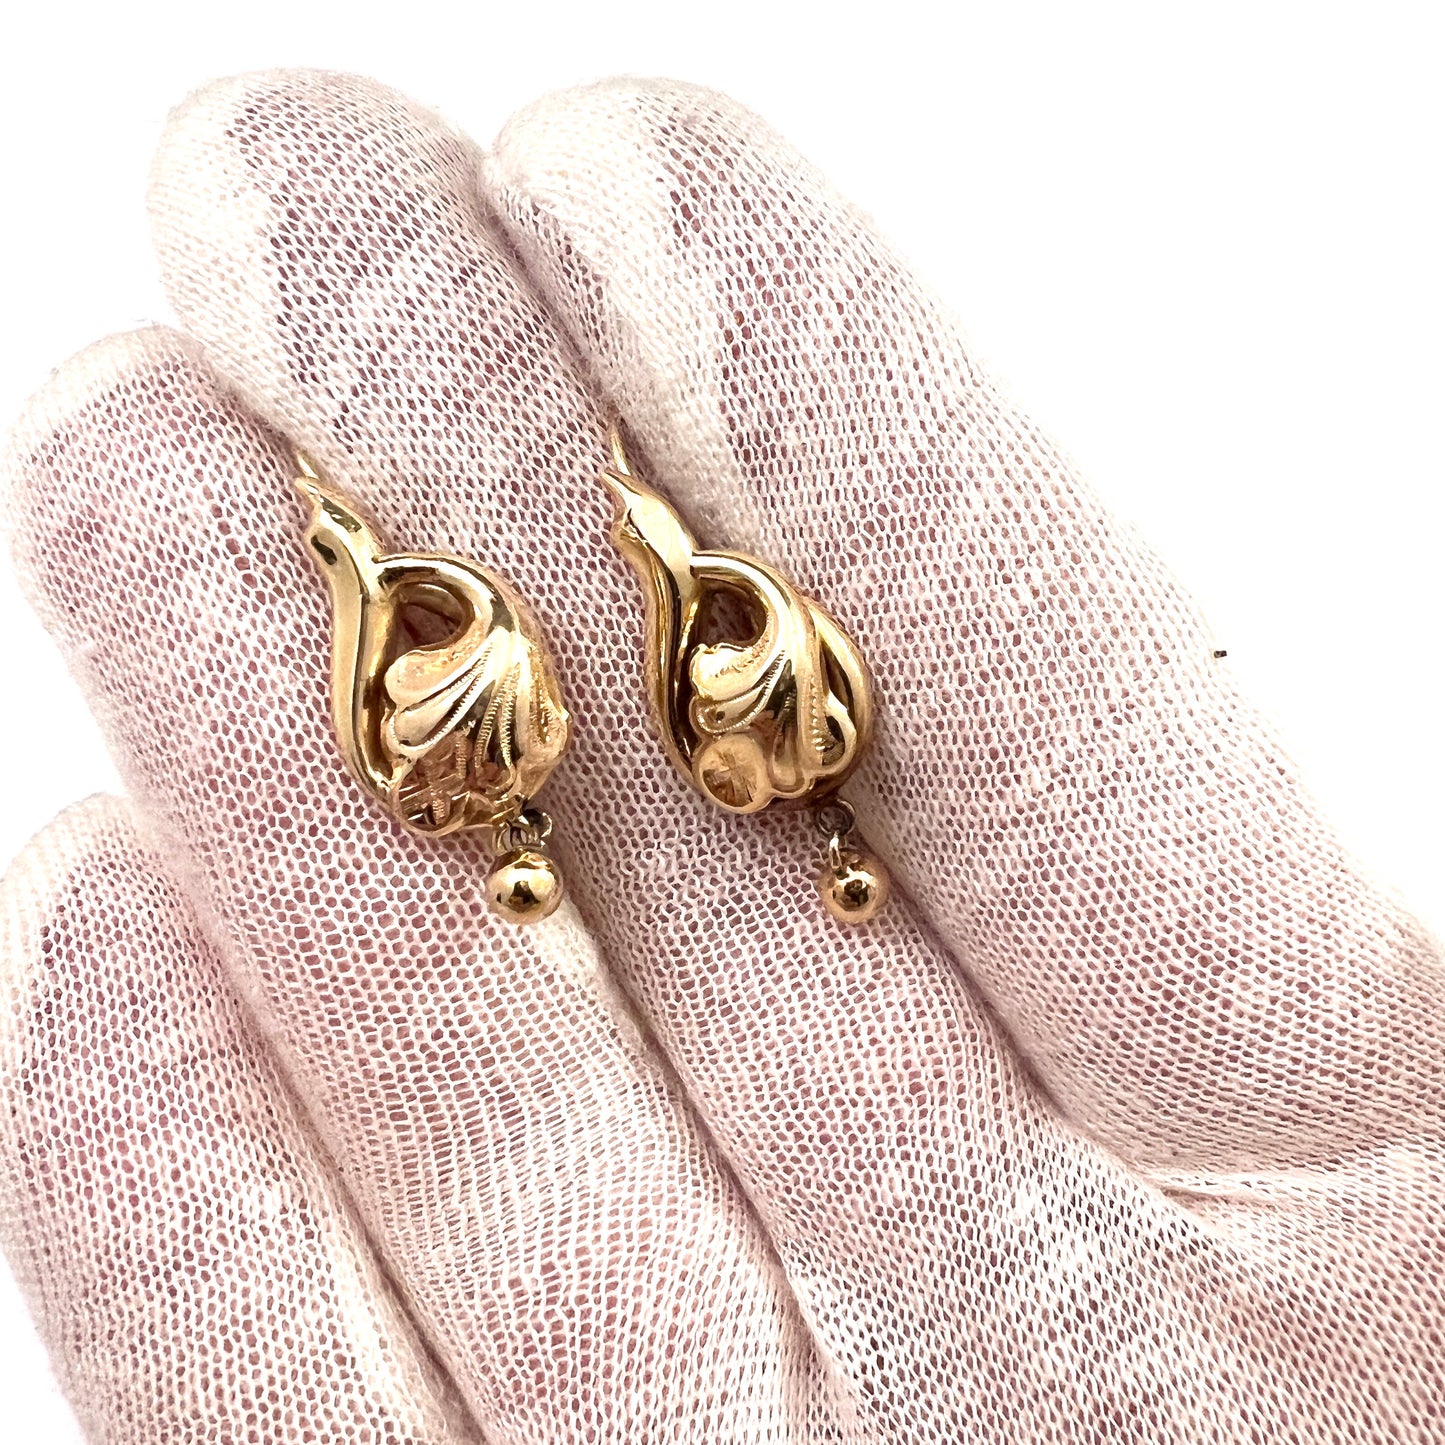 Sweden year 1886. Antique Victorian 18k Gold Earrings.